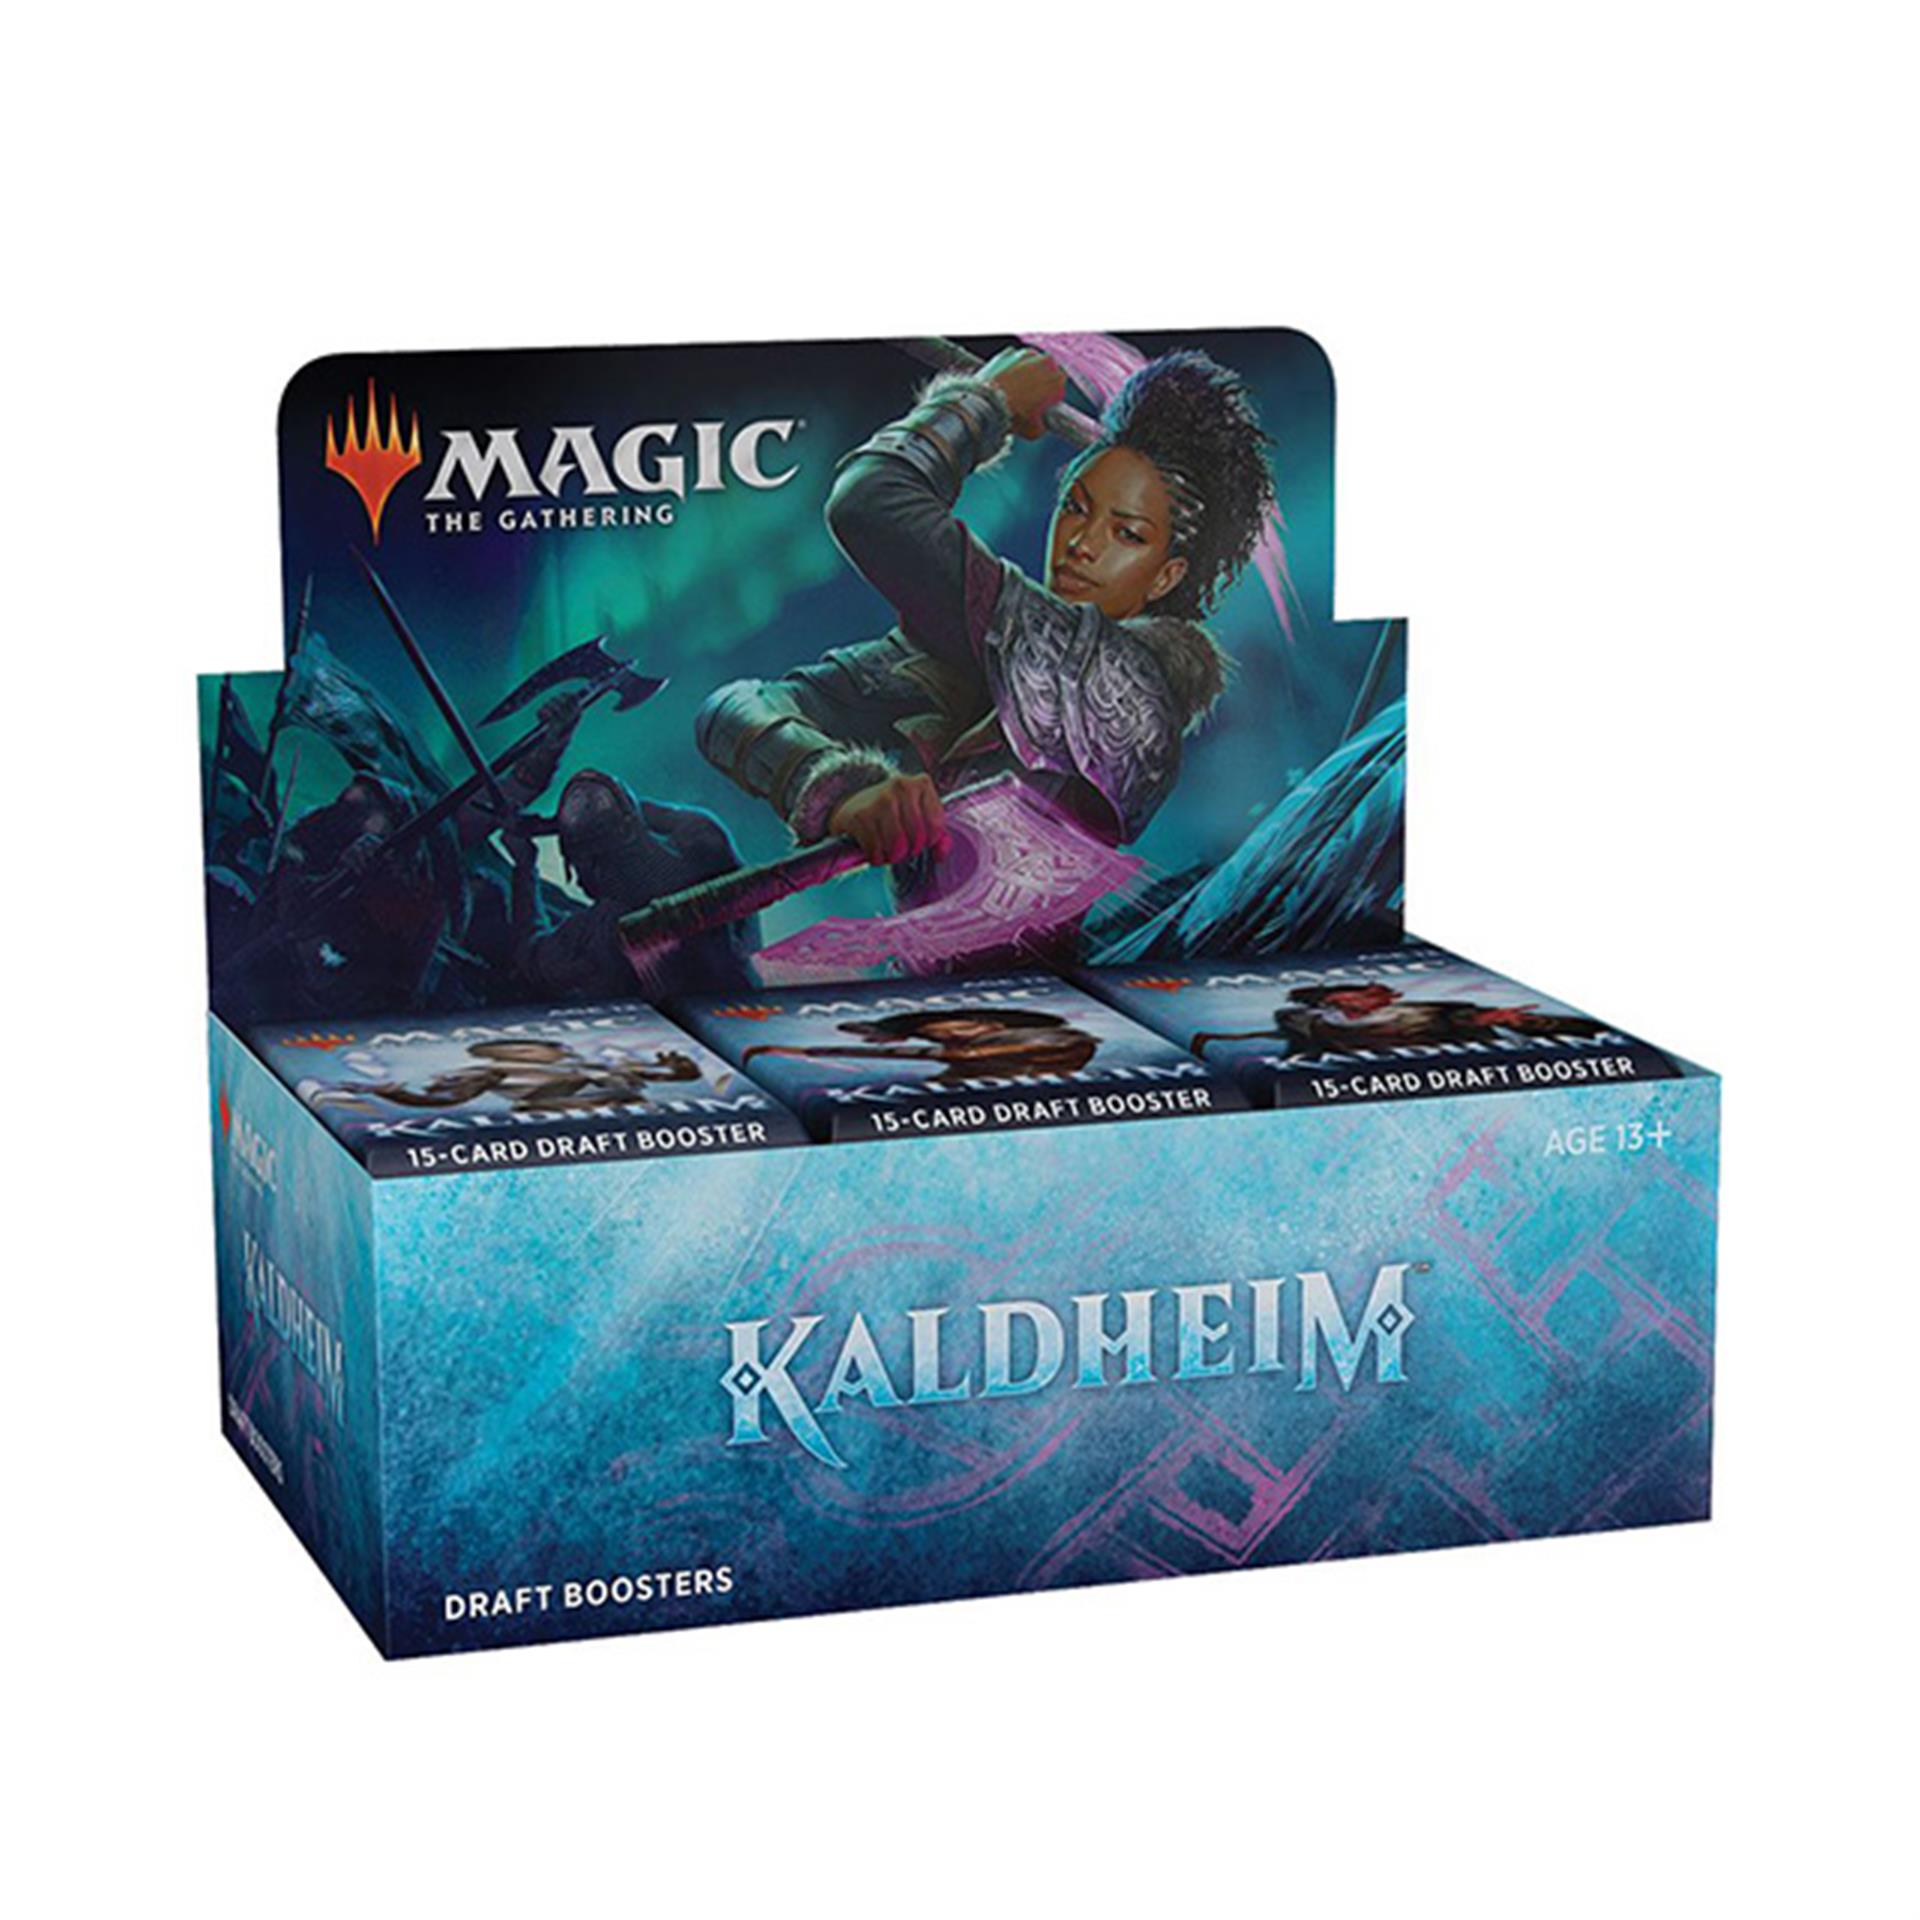 Magic: The Gathering – Kaldheim Draft Boosters Display